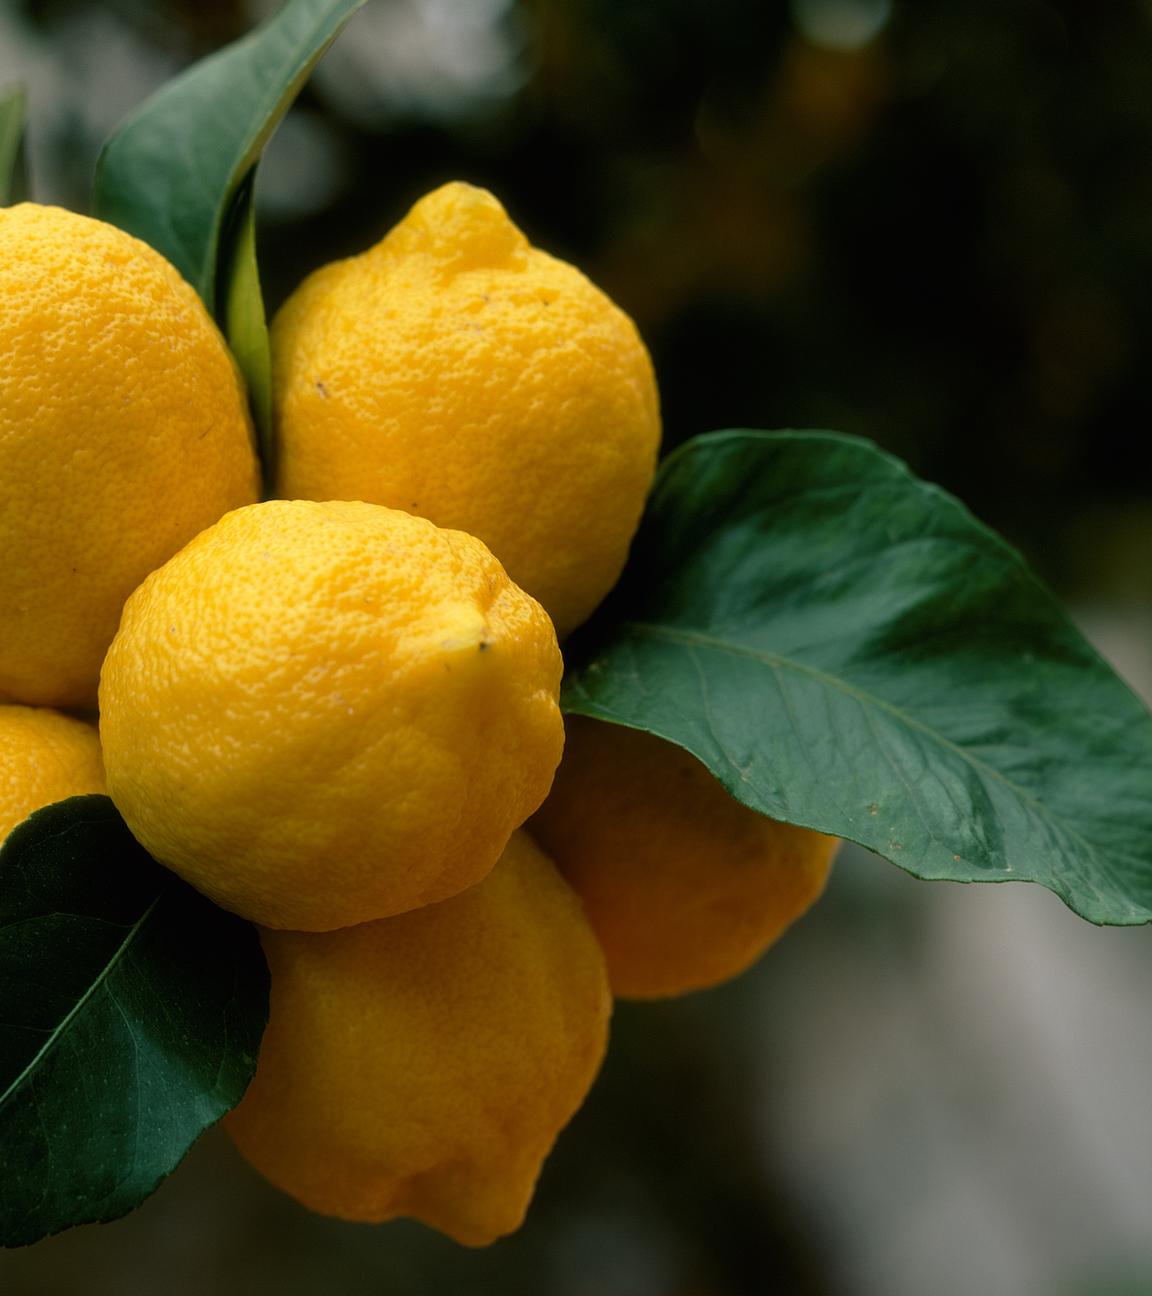 Zitronen hängen an einem Baum